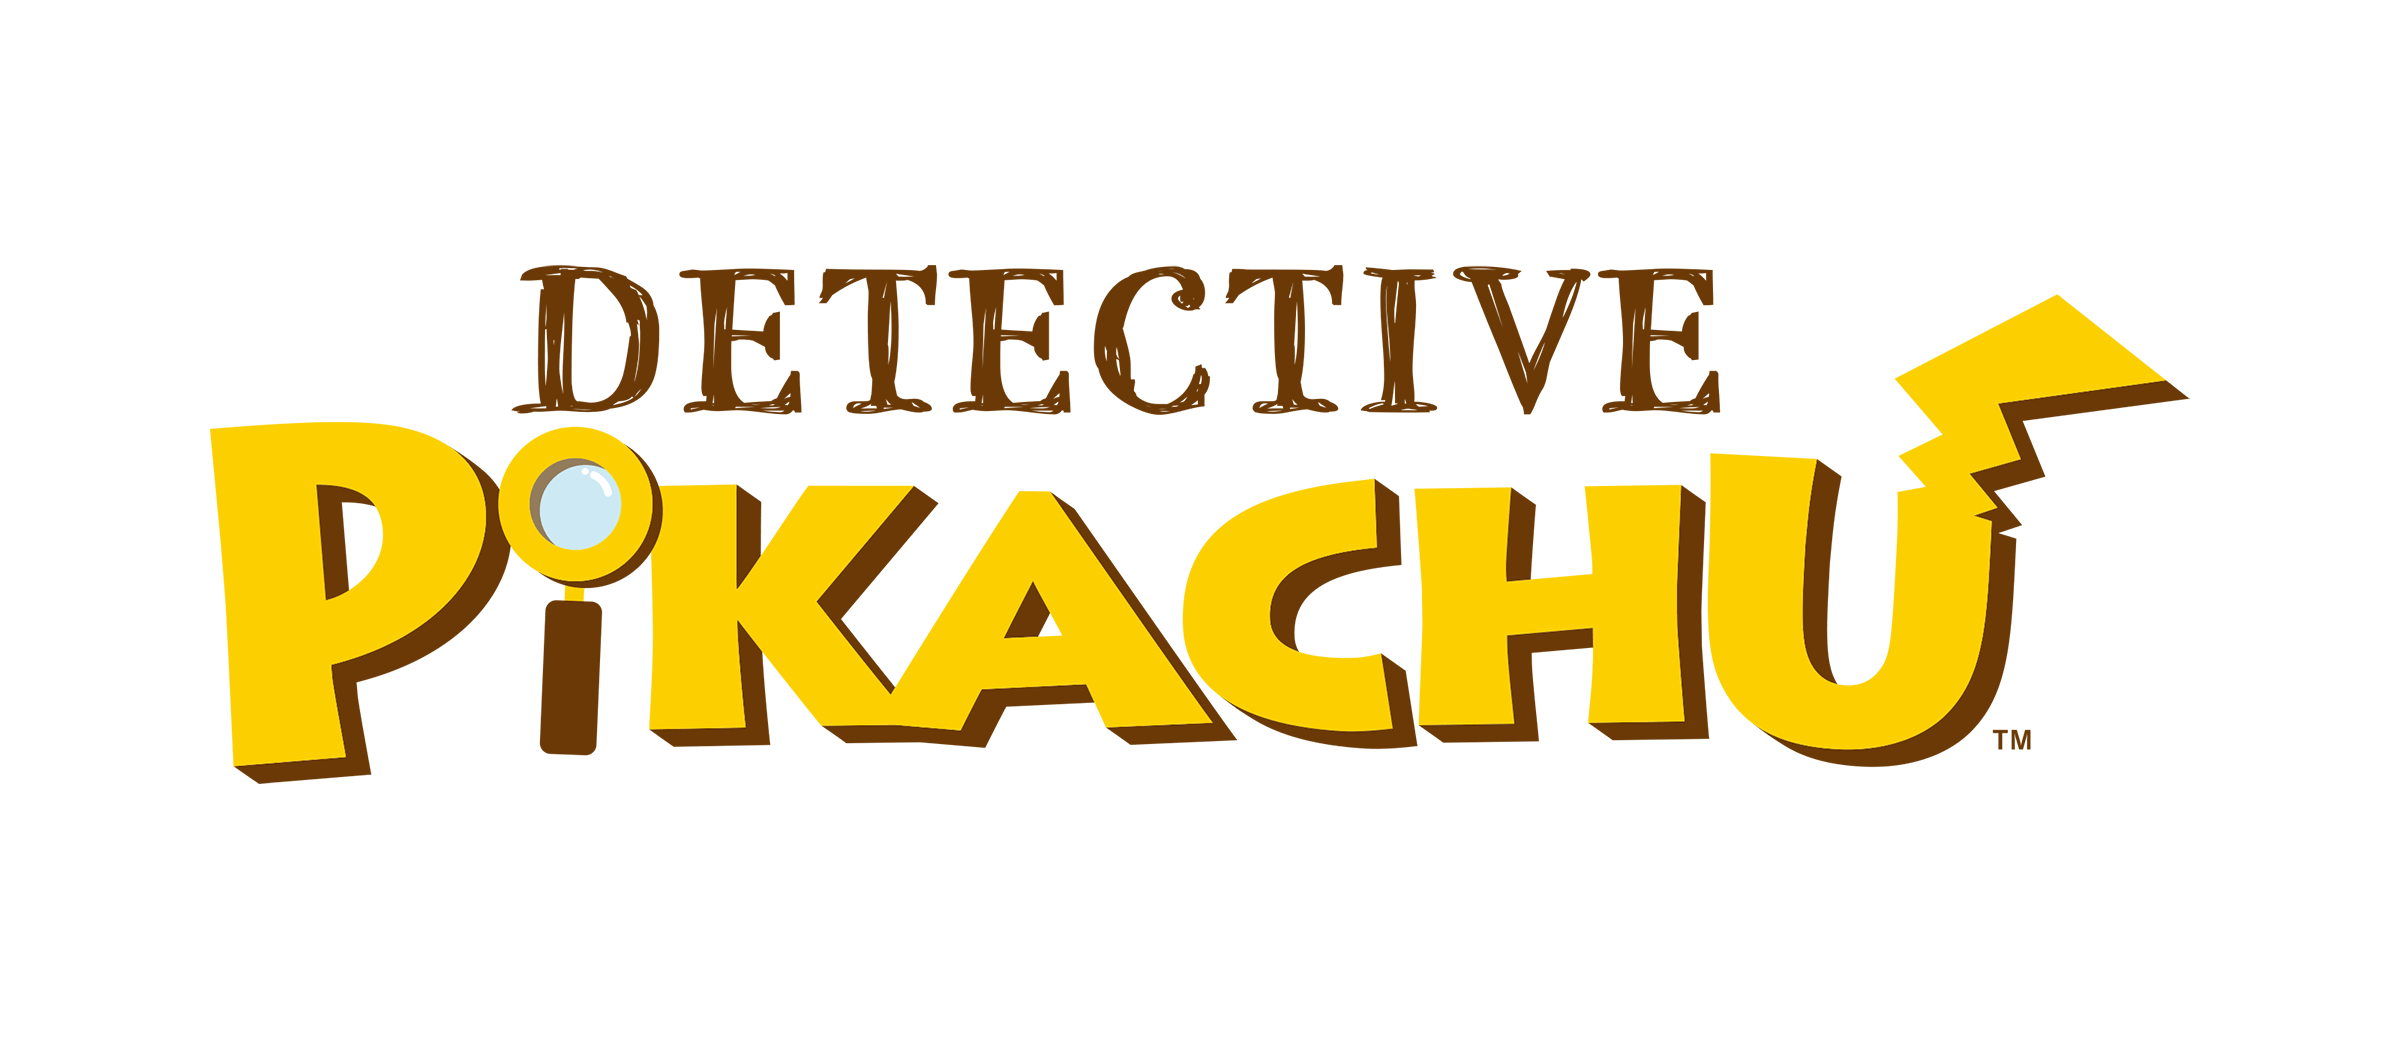 Pikachu Logo - Detective-Pikachu-Logo - Pokémon Crossroads